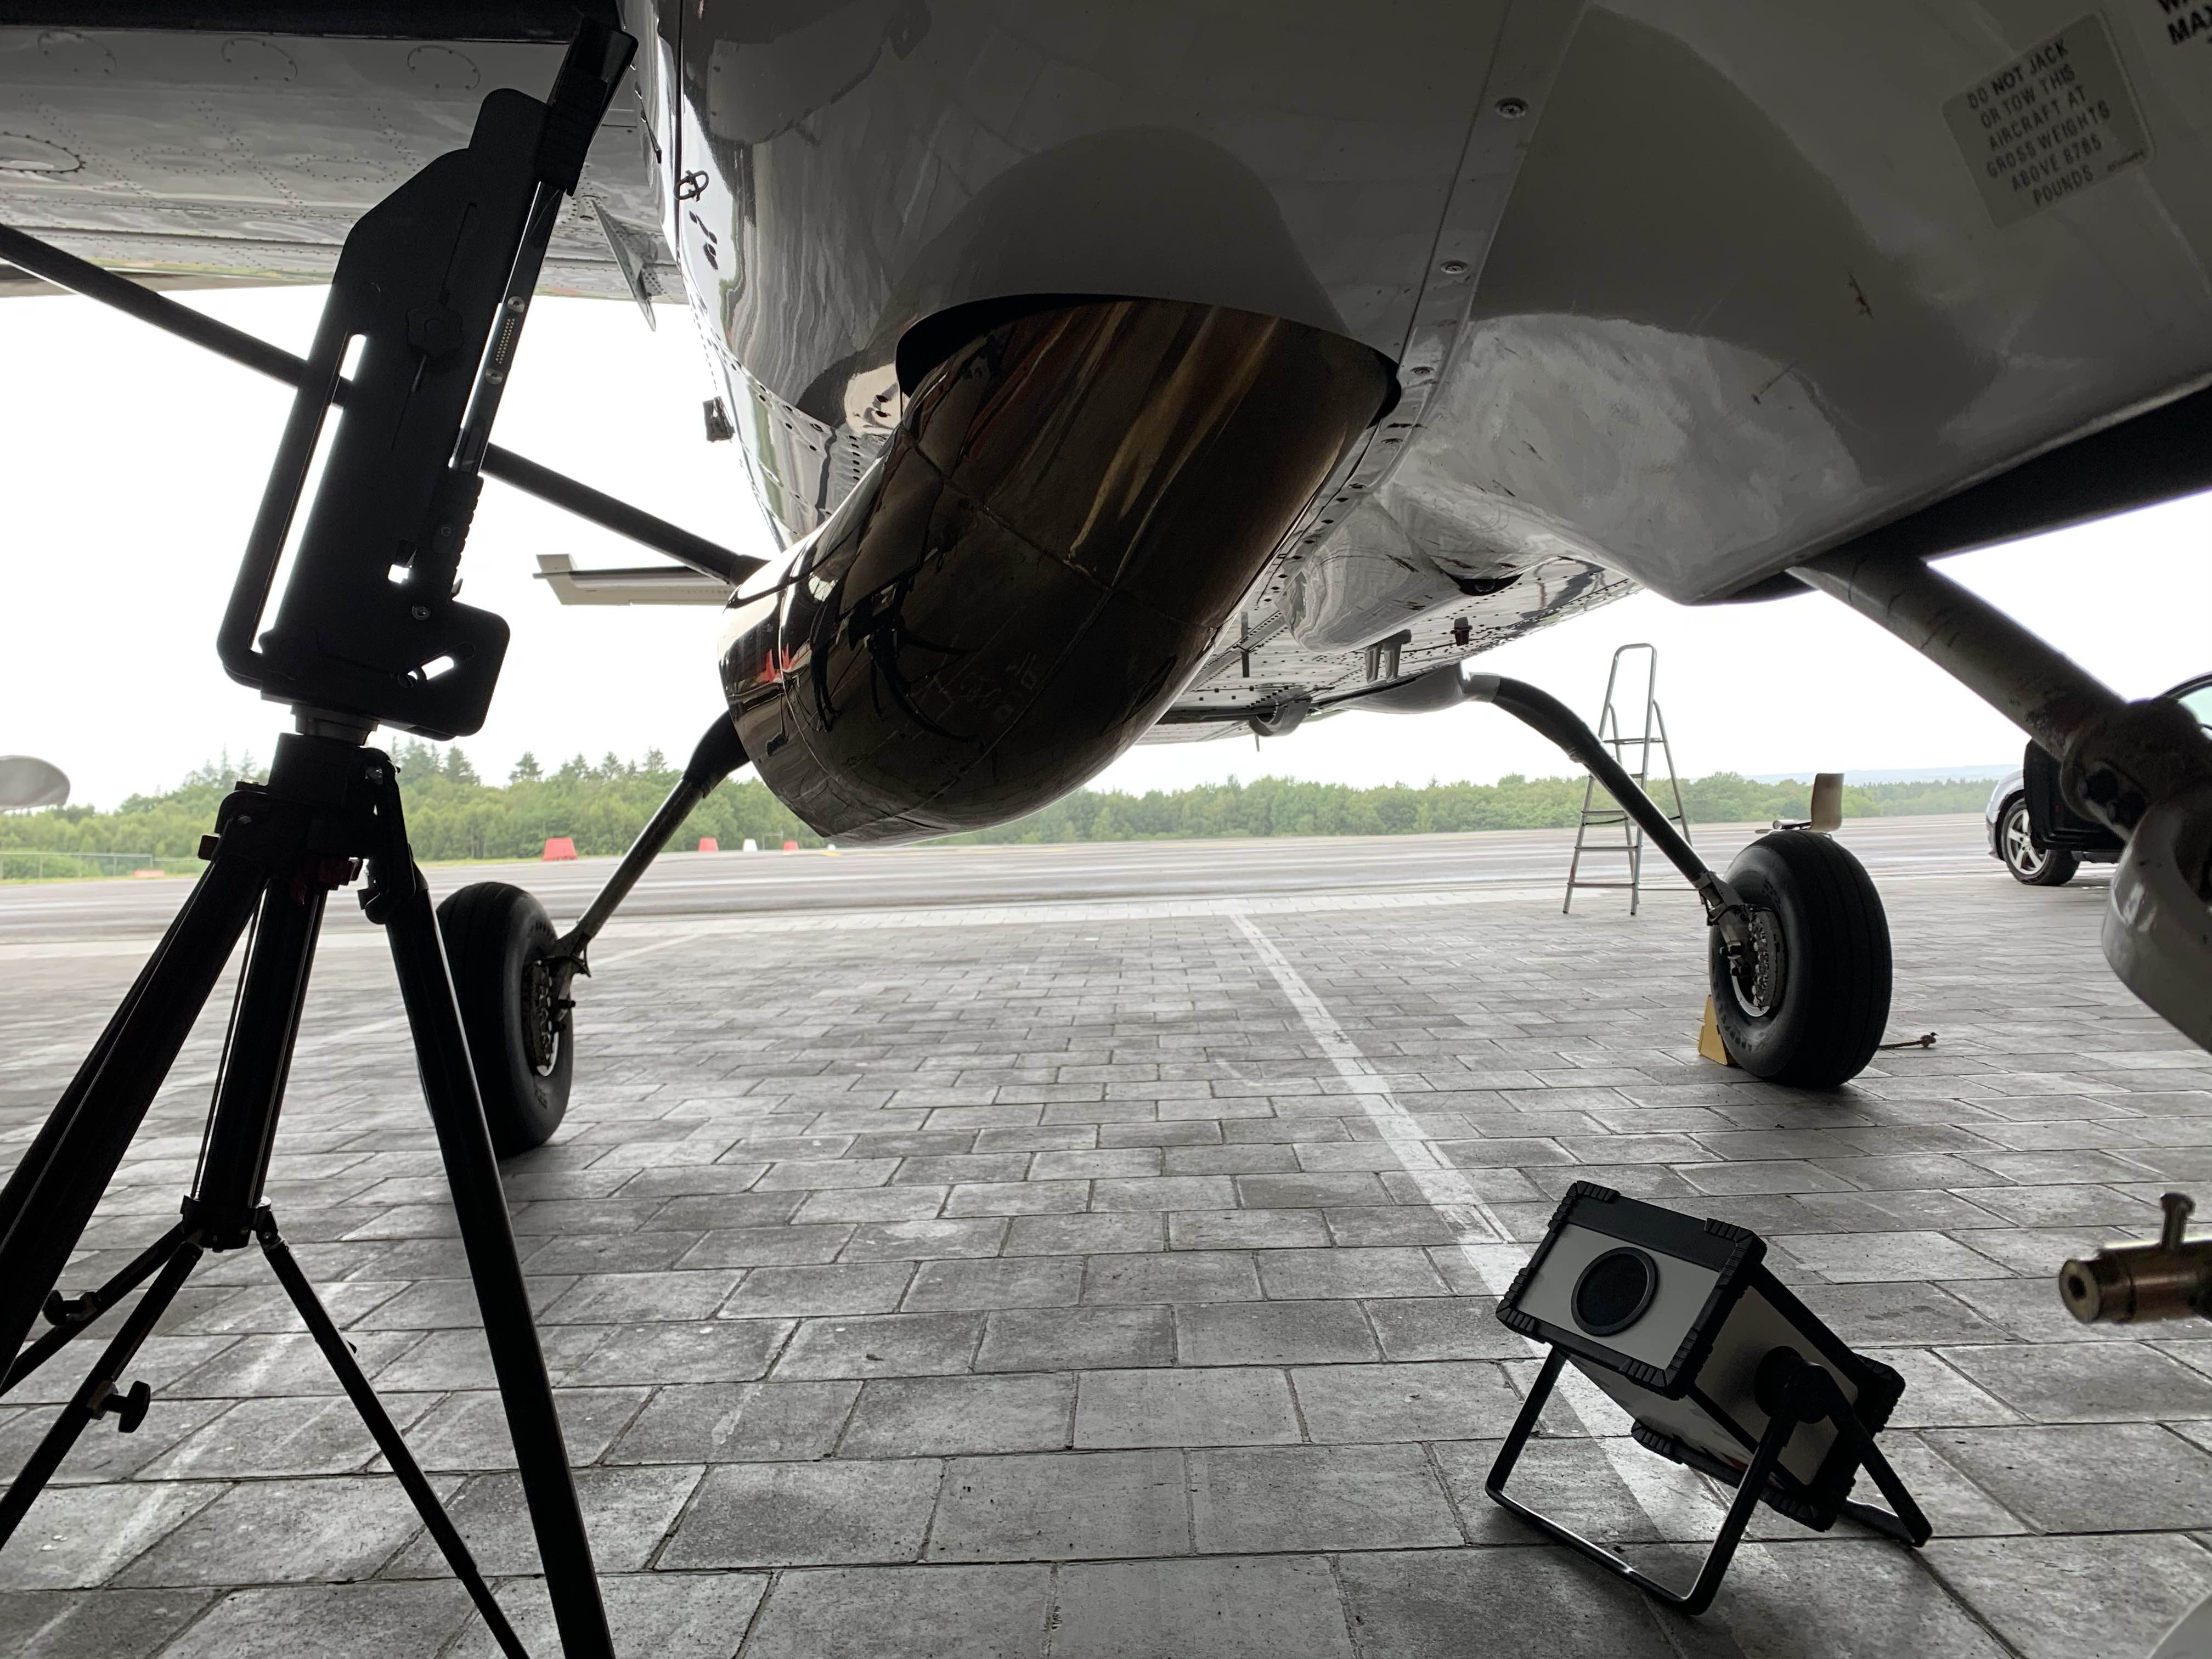 Aerospace application, flexible access is critical